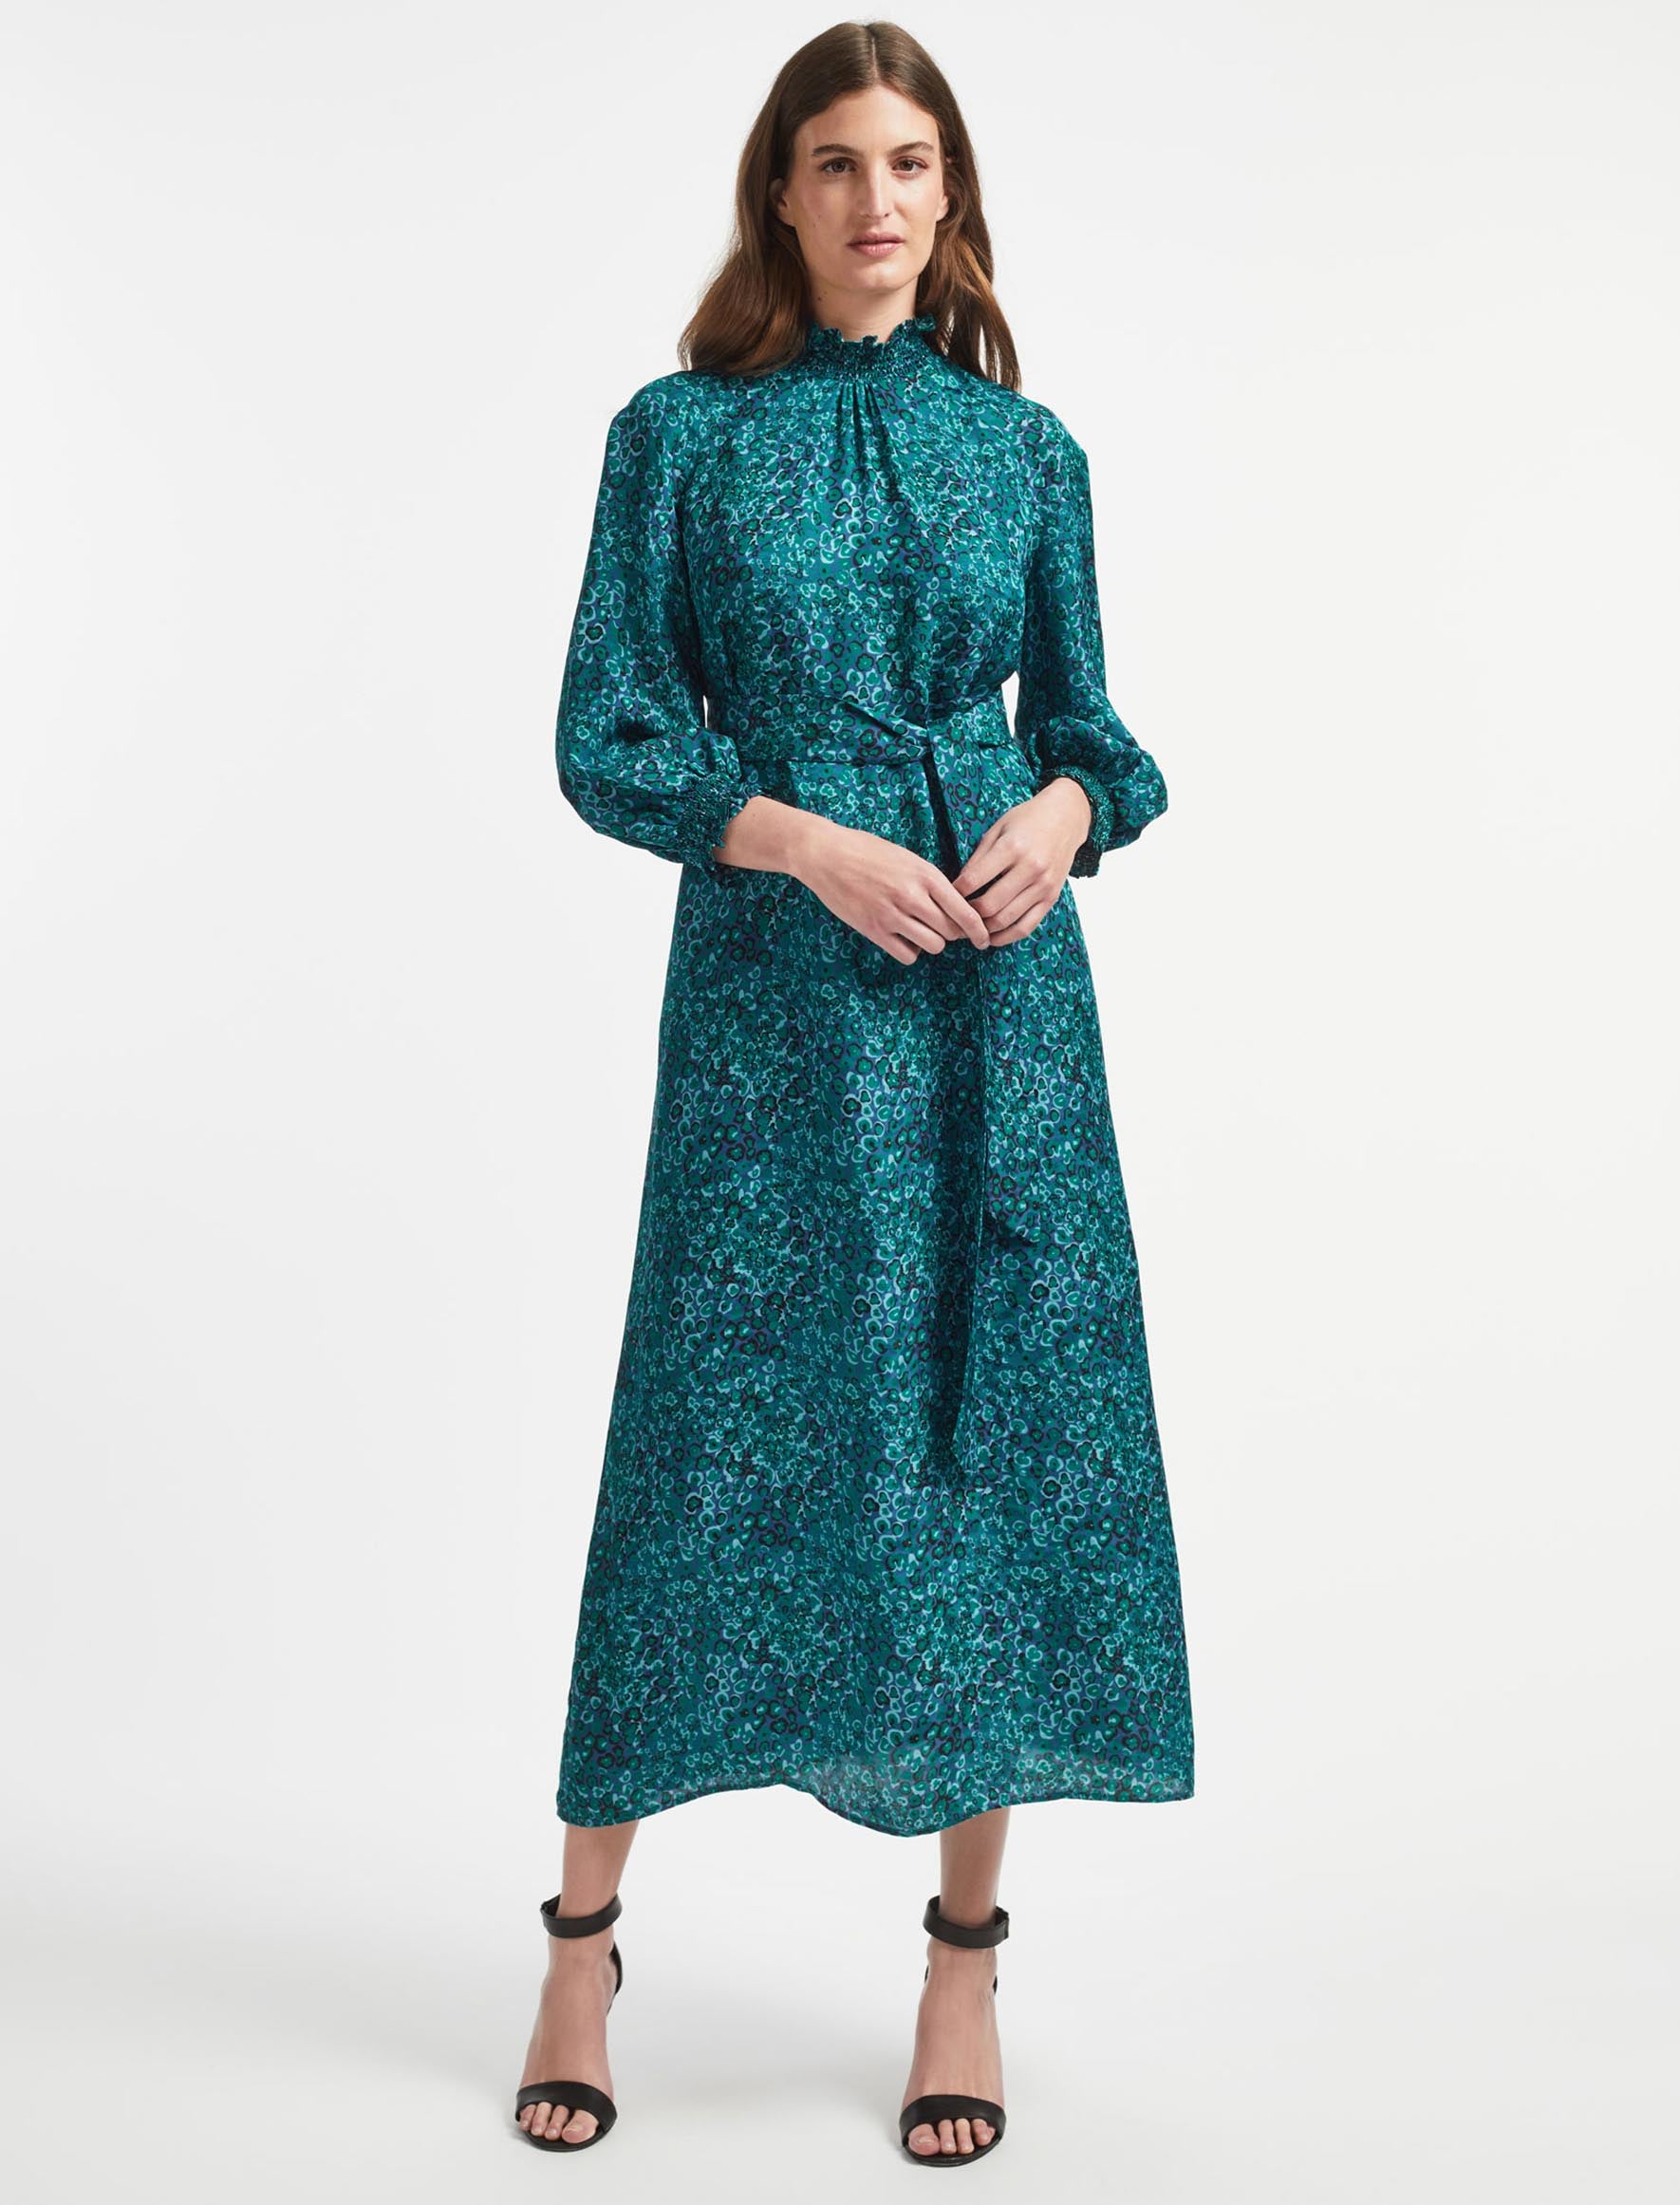 Cefinn Rosamund Silk Blend Maxi Dress - Turquoise Blue Leopard Pansy Print